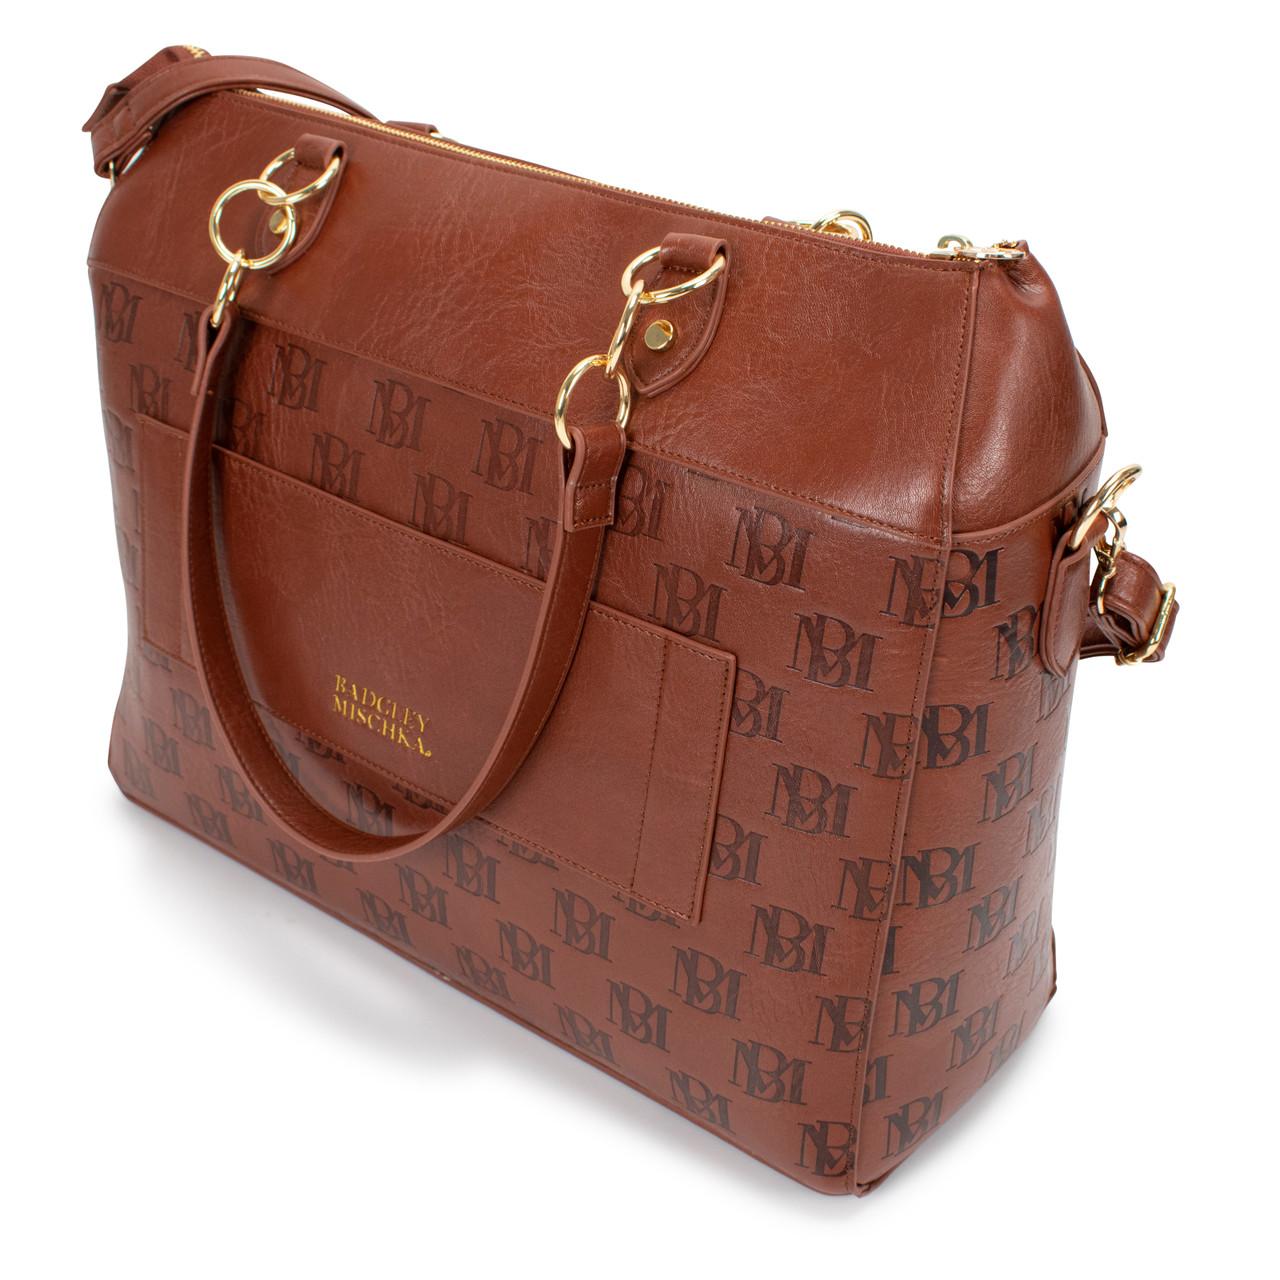 Badgley Mischka Diana Vegan Leather Tote Weekender Travel Bag